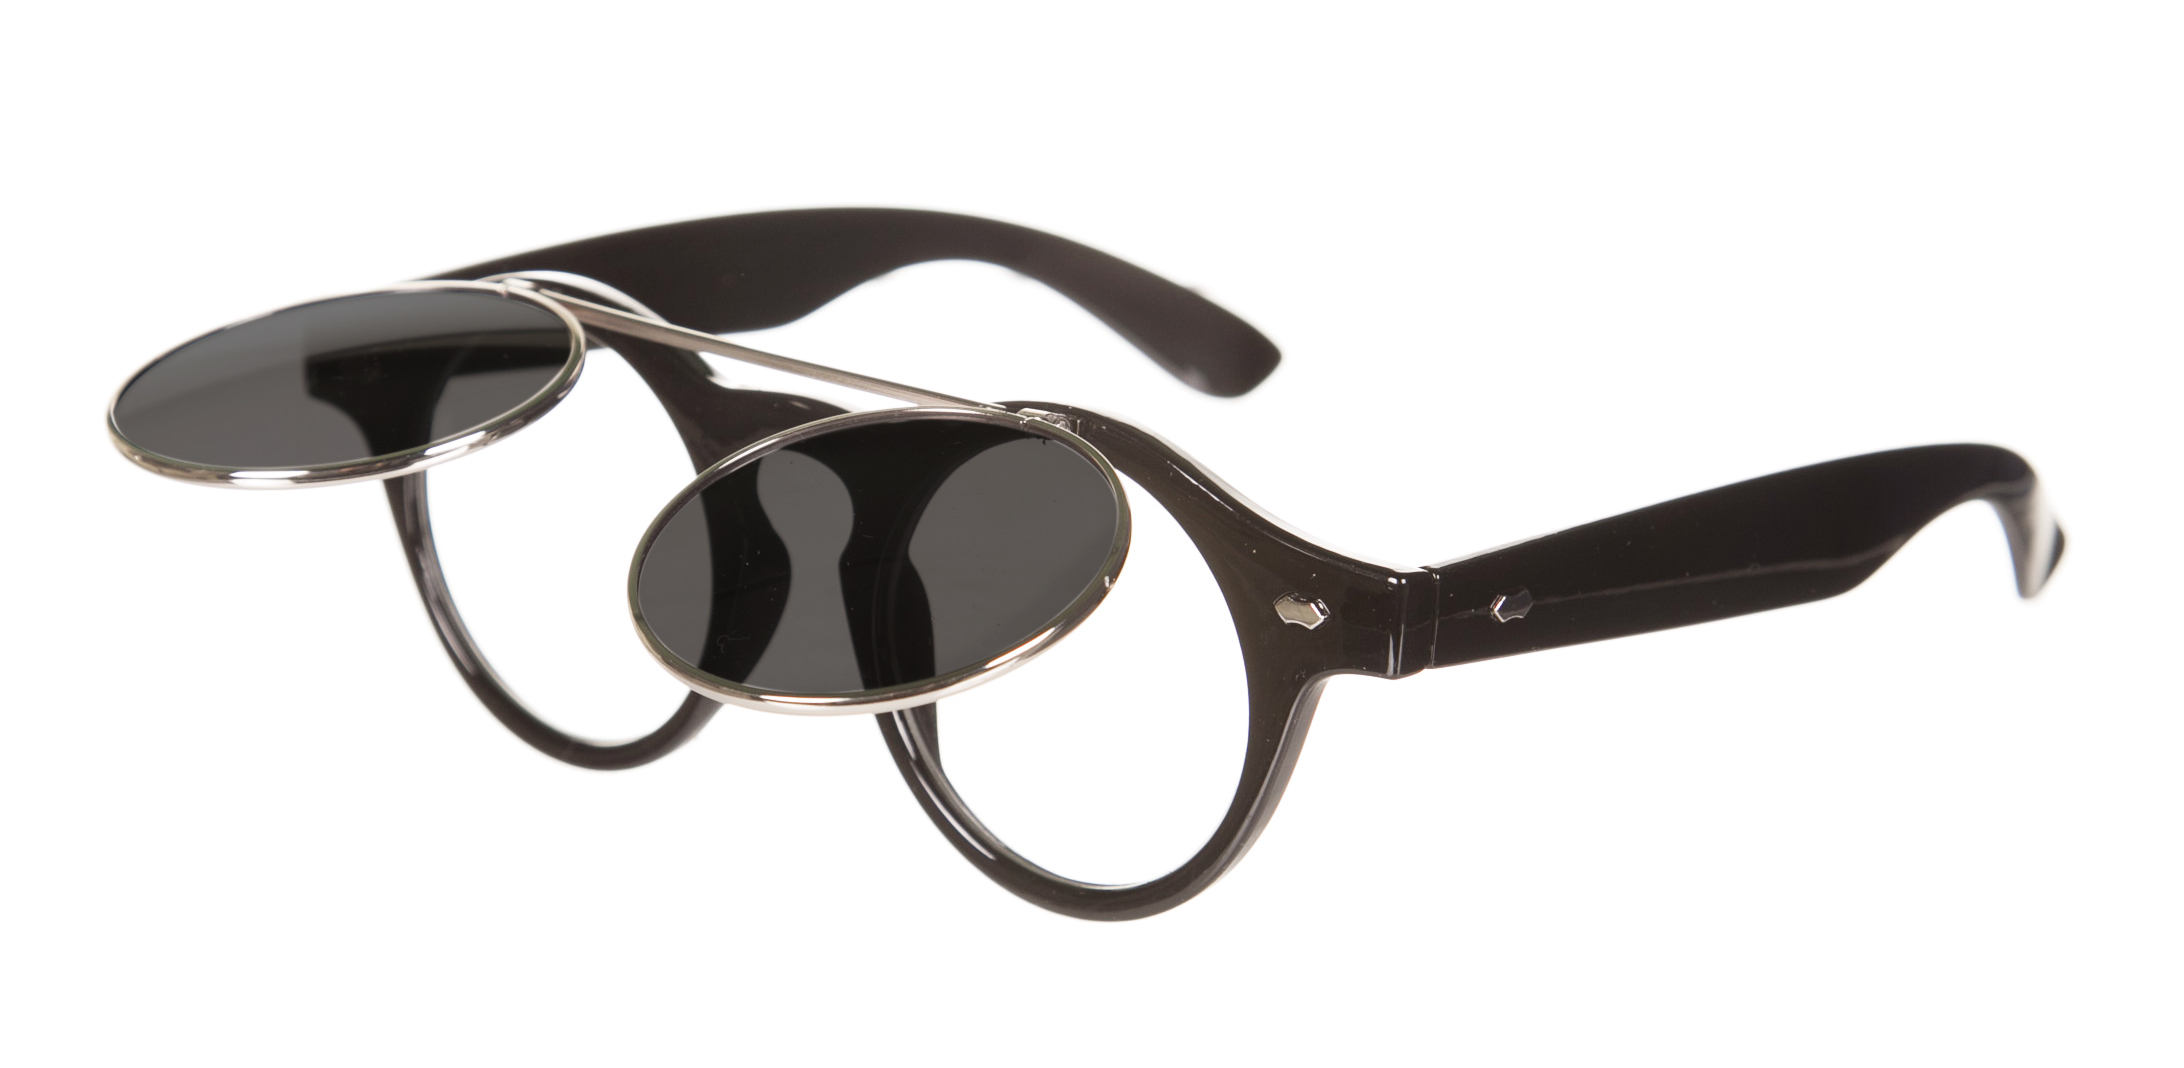 Retro Black Round Flipster Sunglasses from